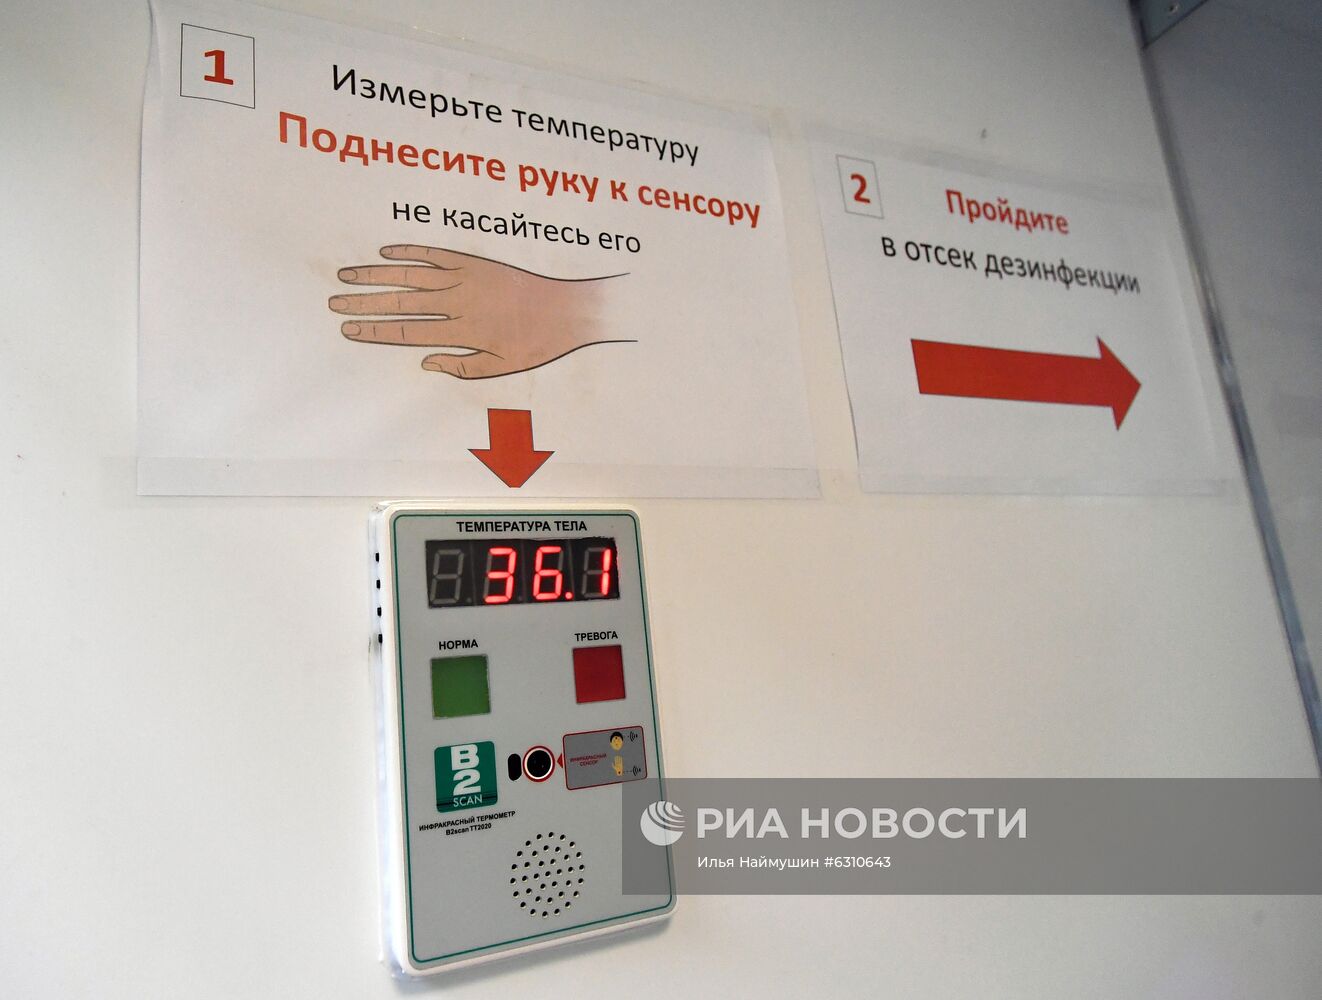 Дезинфицирующий коридор установили в аэропорту Красноярска